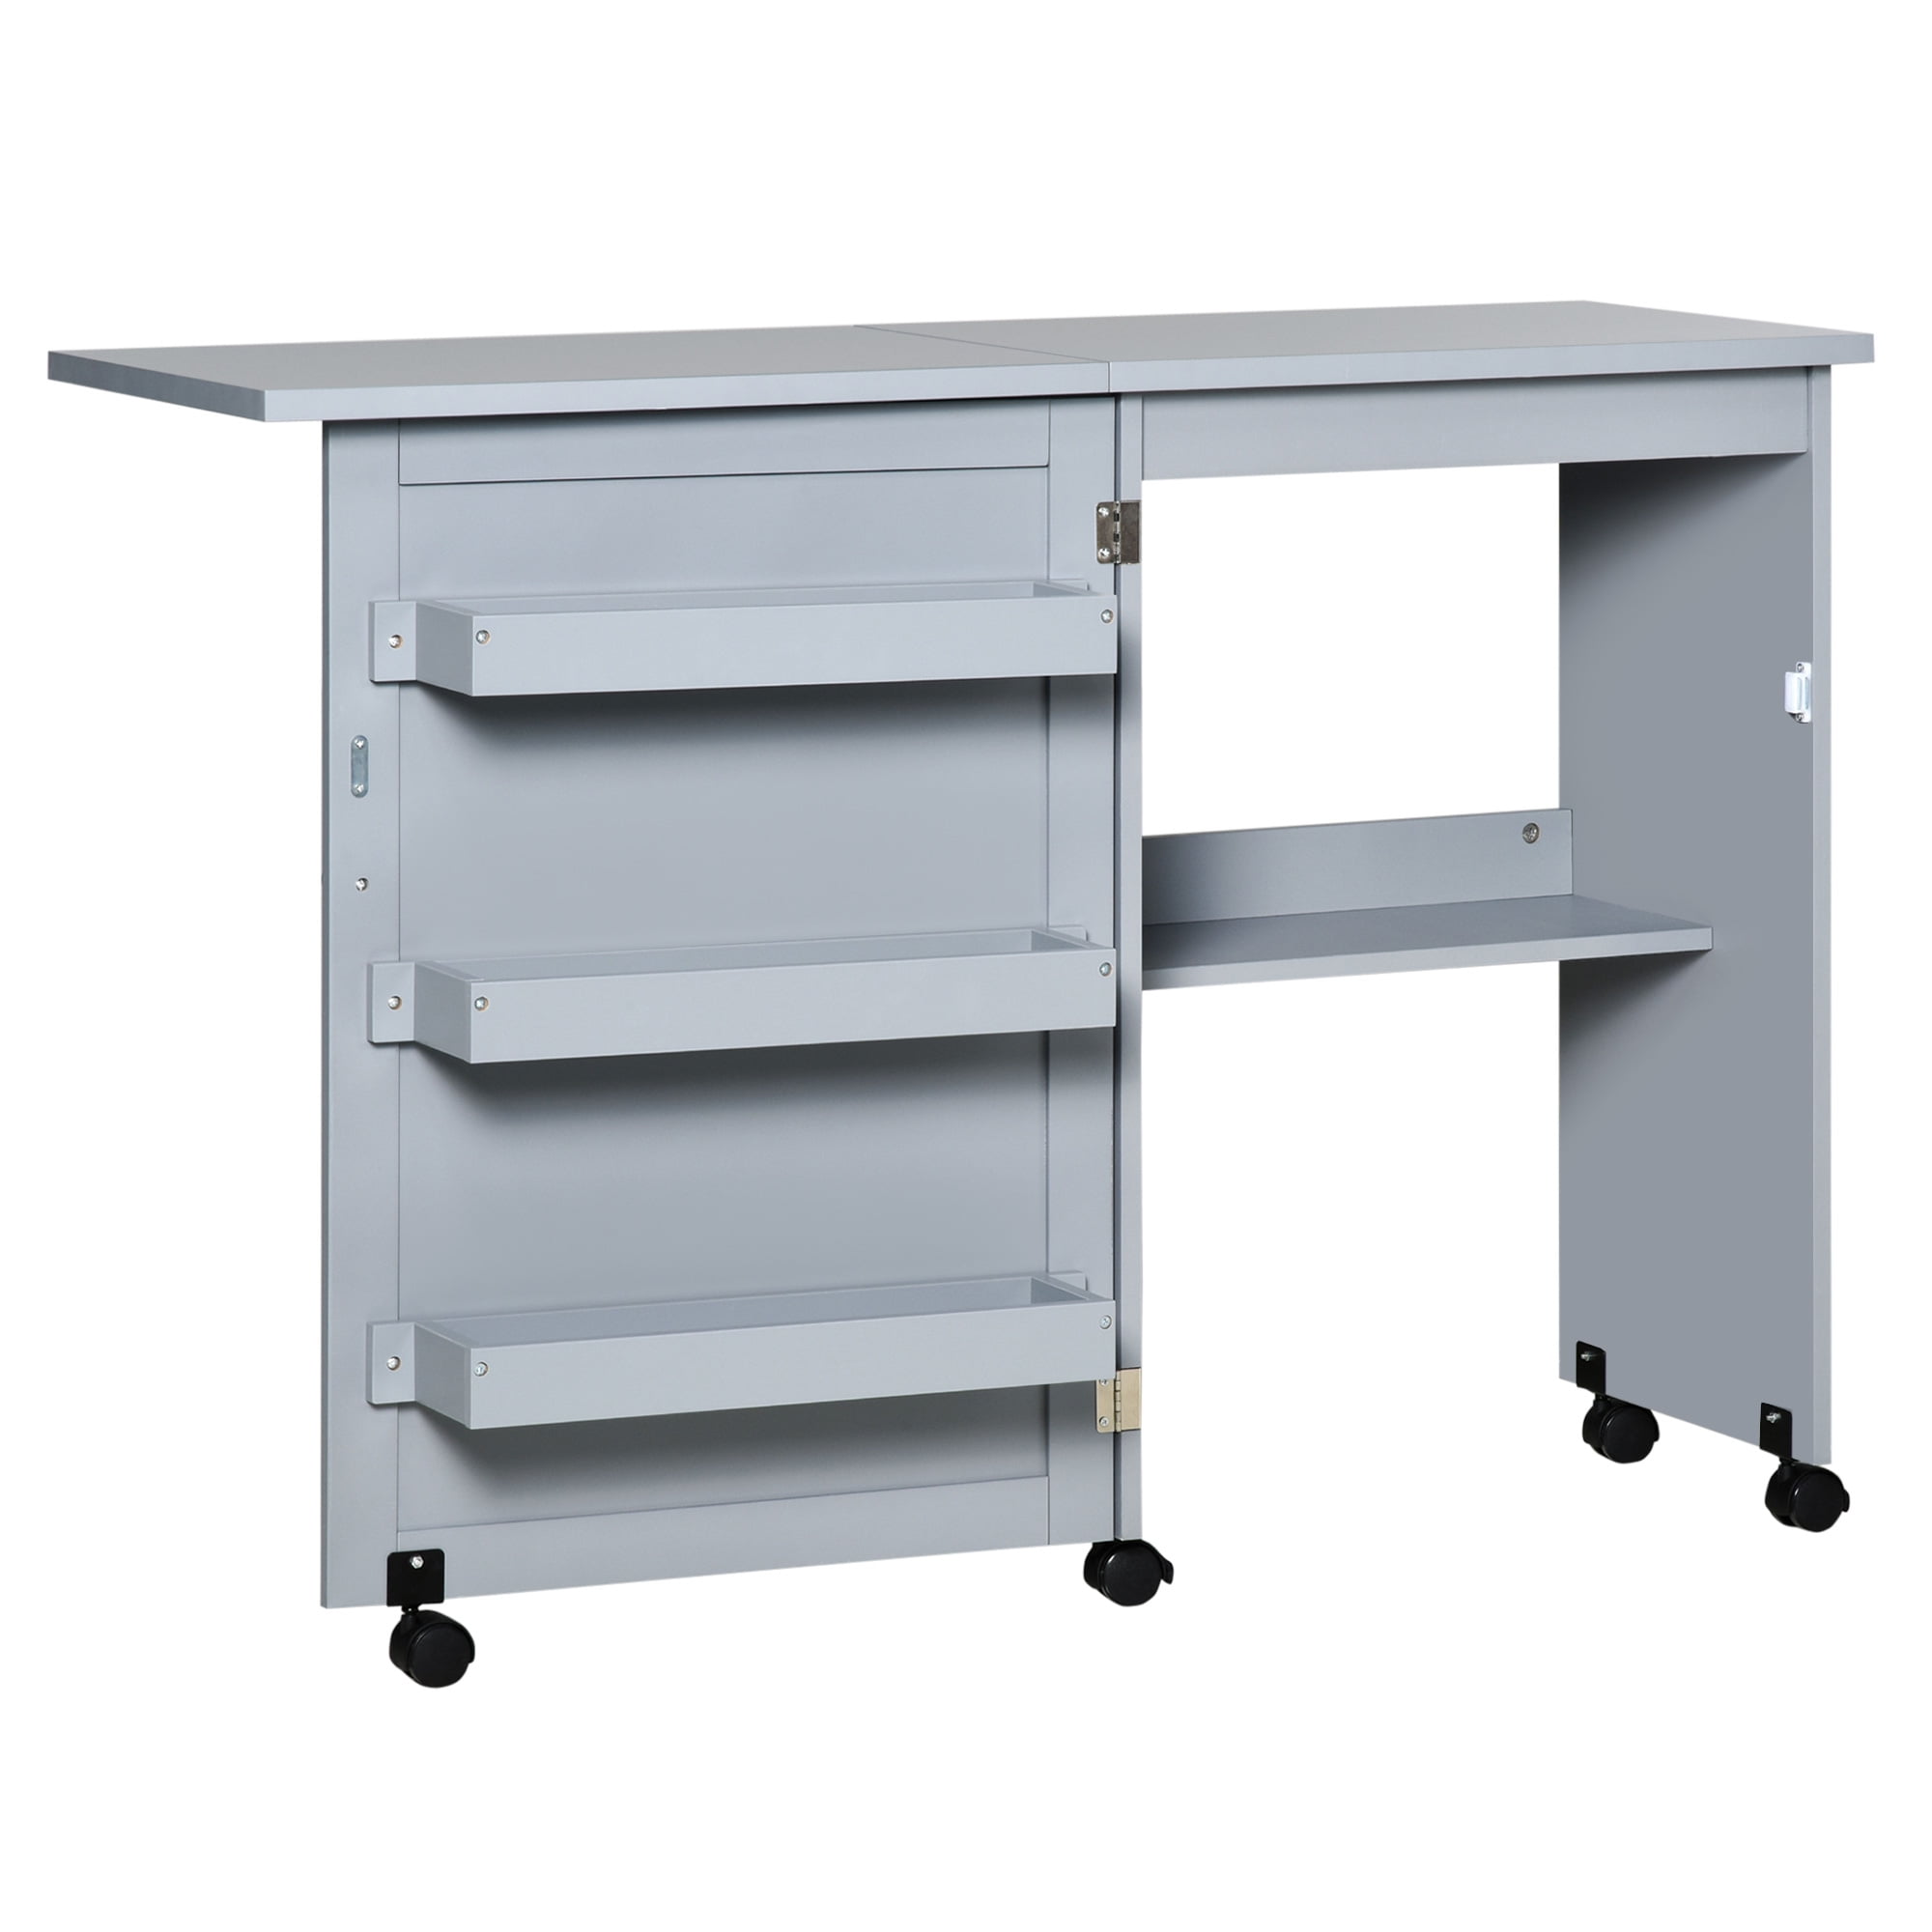 Sewing Machine Table Craft Work Station Drop Leaf Shelves Storage Bins Cabinets